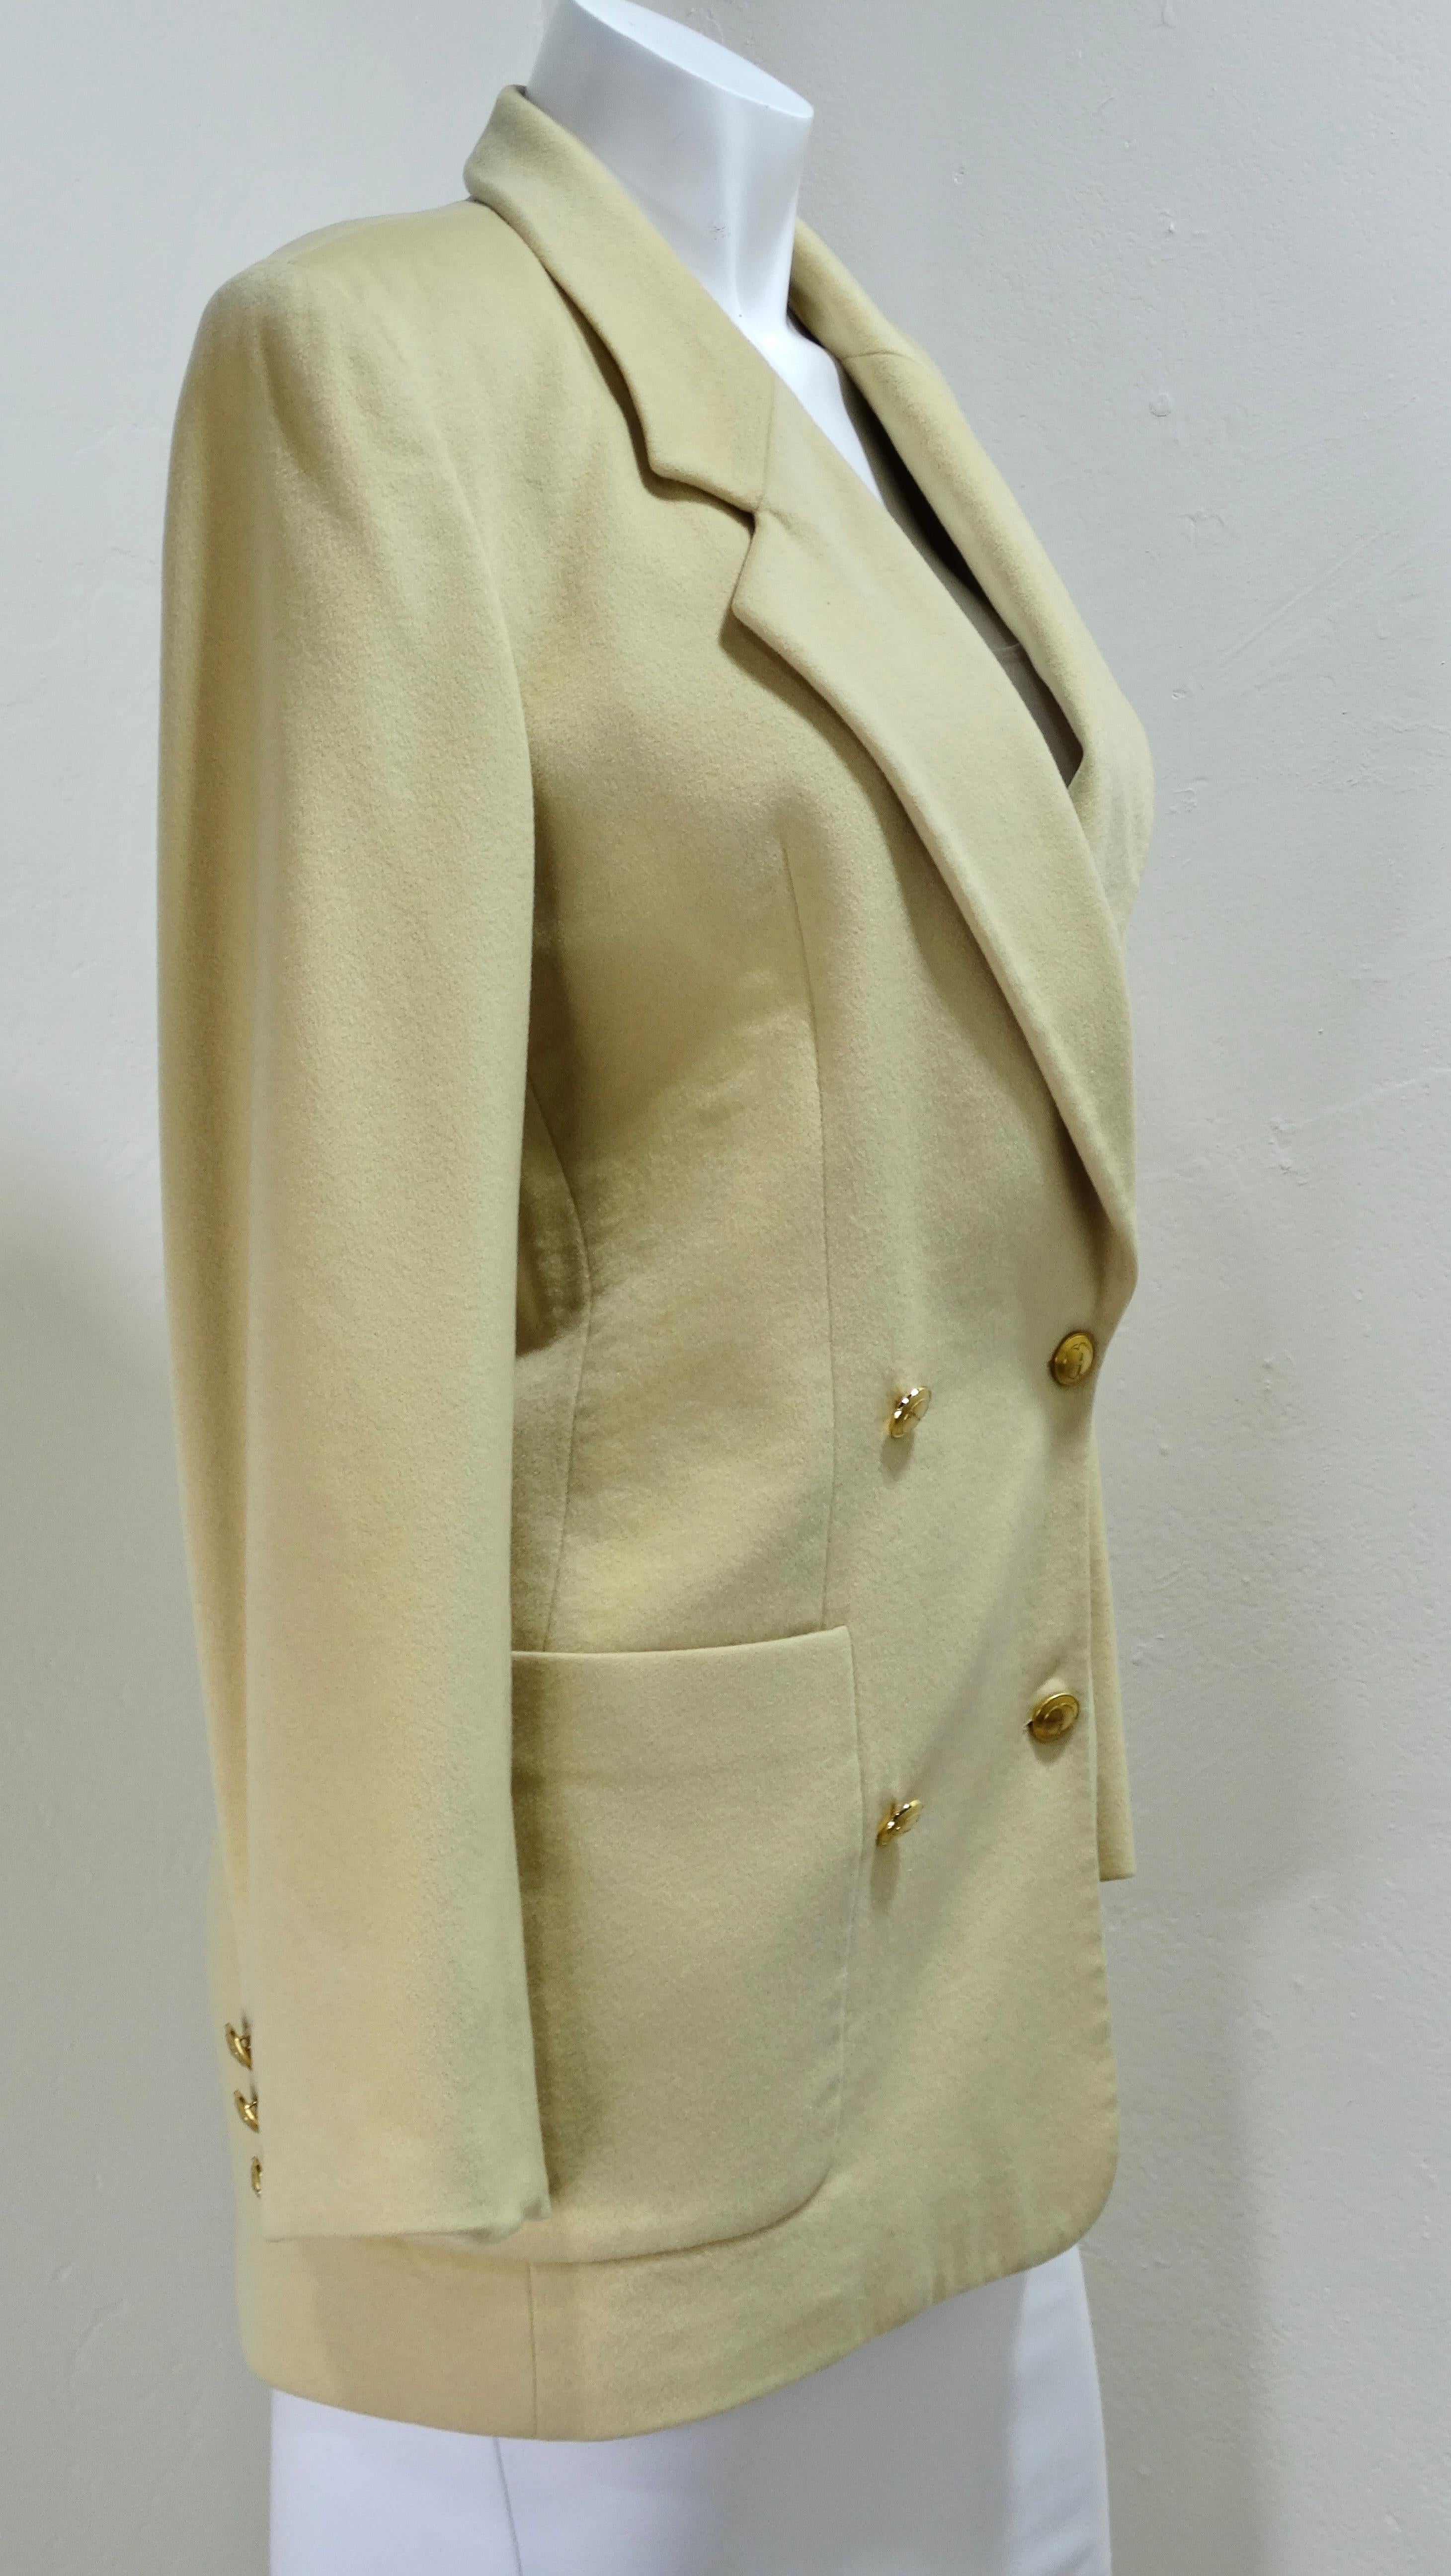 Gucci Vintage 1990's Cashmere Blazer In Excellent Condition For Sale In Scottsdale, AZ